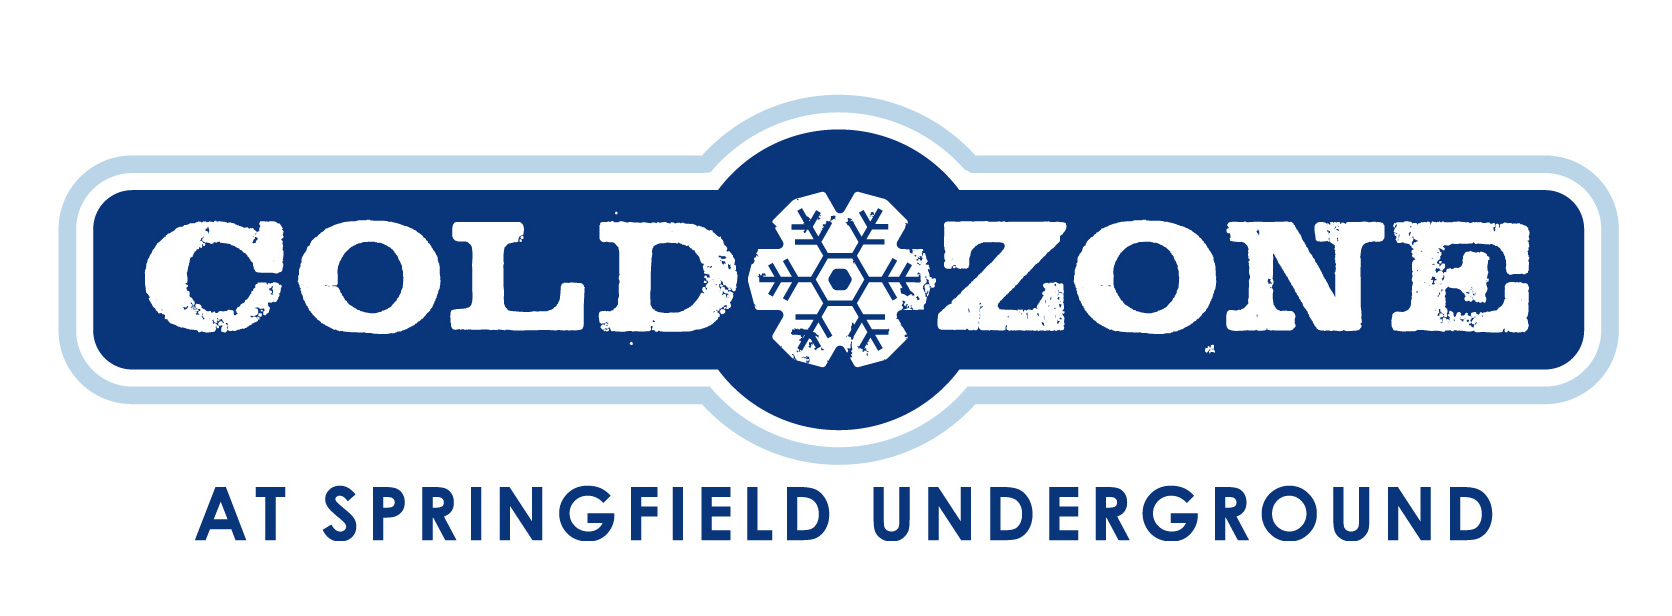 Cold Zone at Springfield Underground